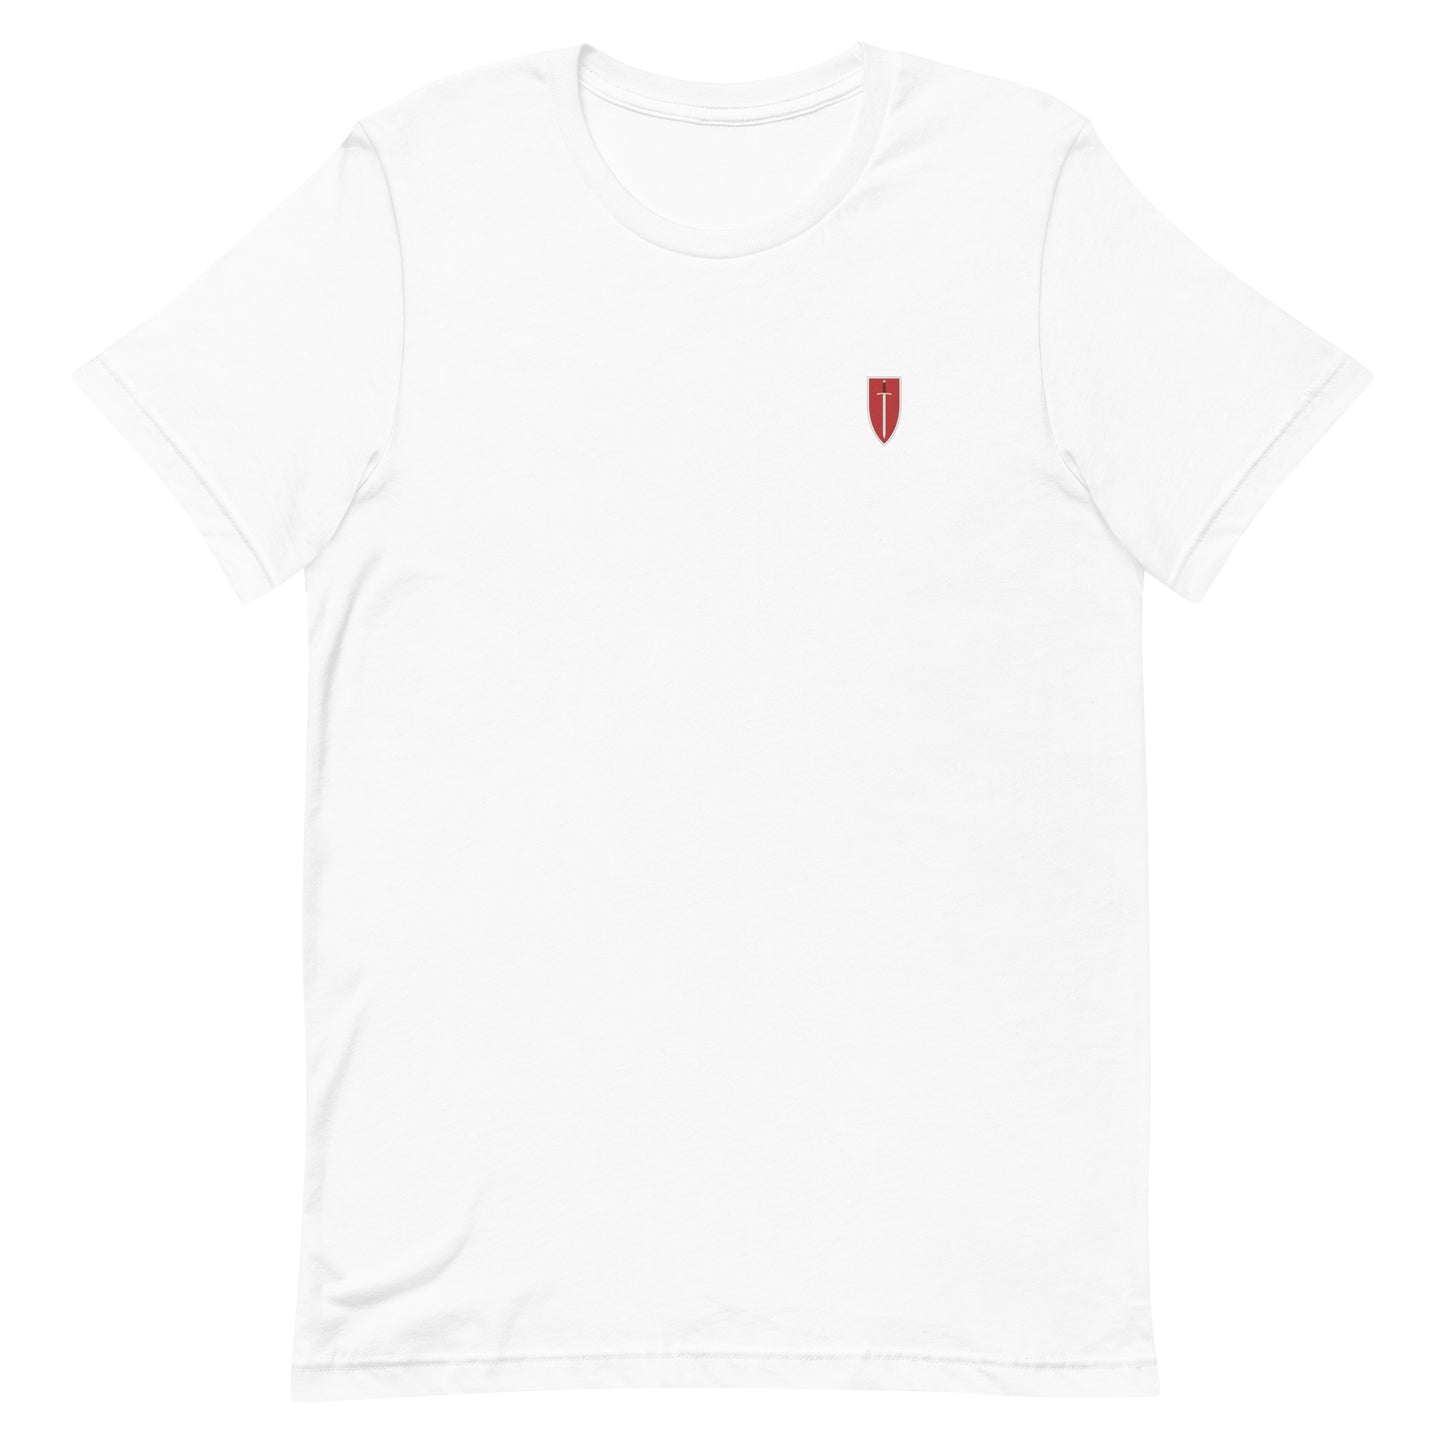 Corinite Sword and Shield, Printed - Sigil Attire - Unisex T-shirt